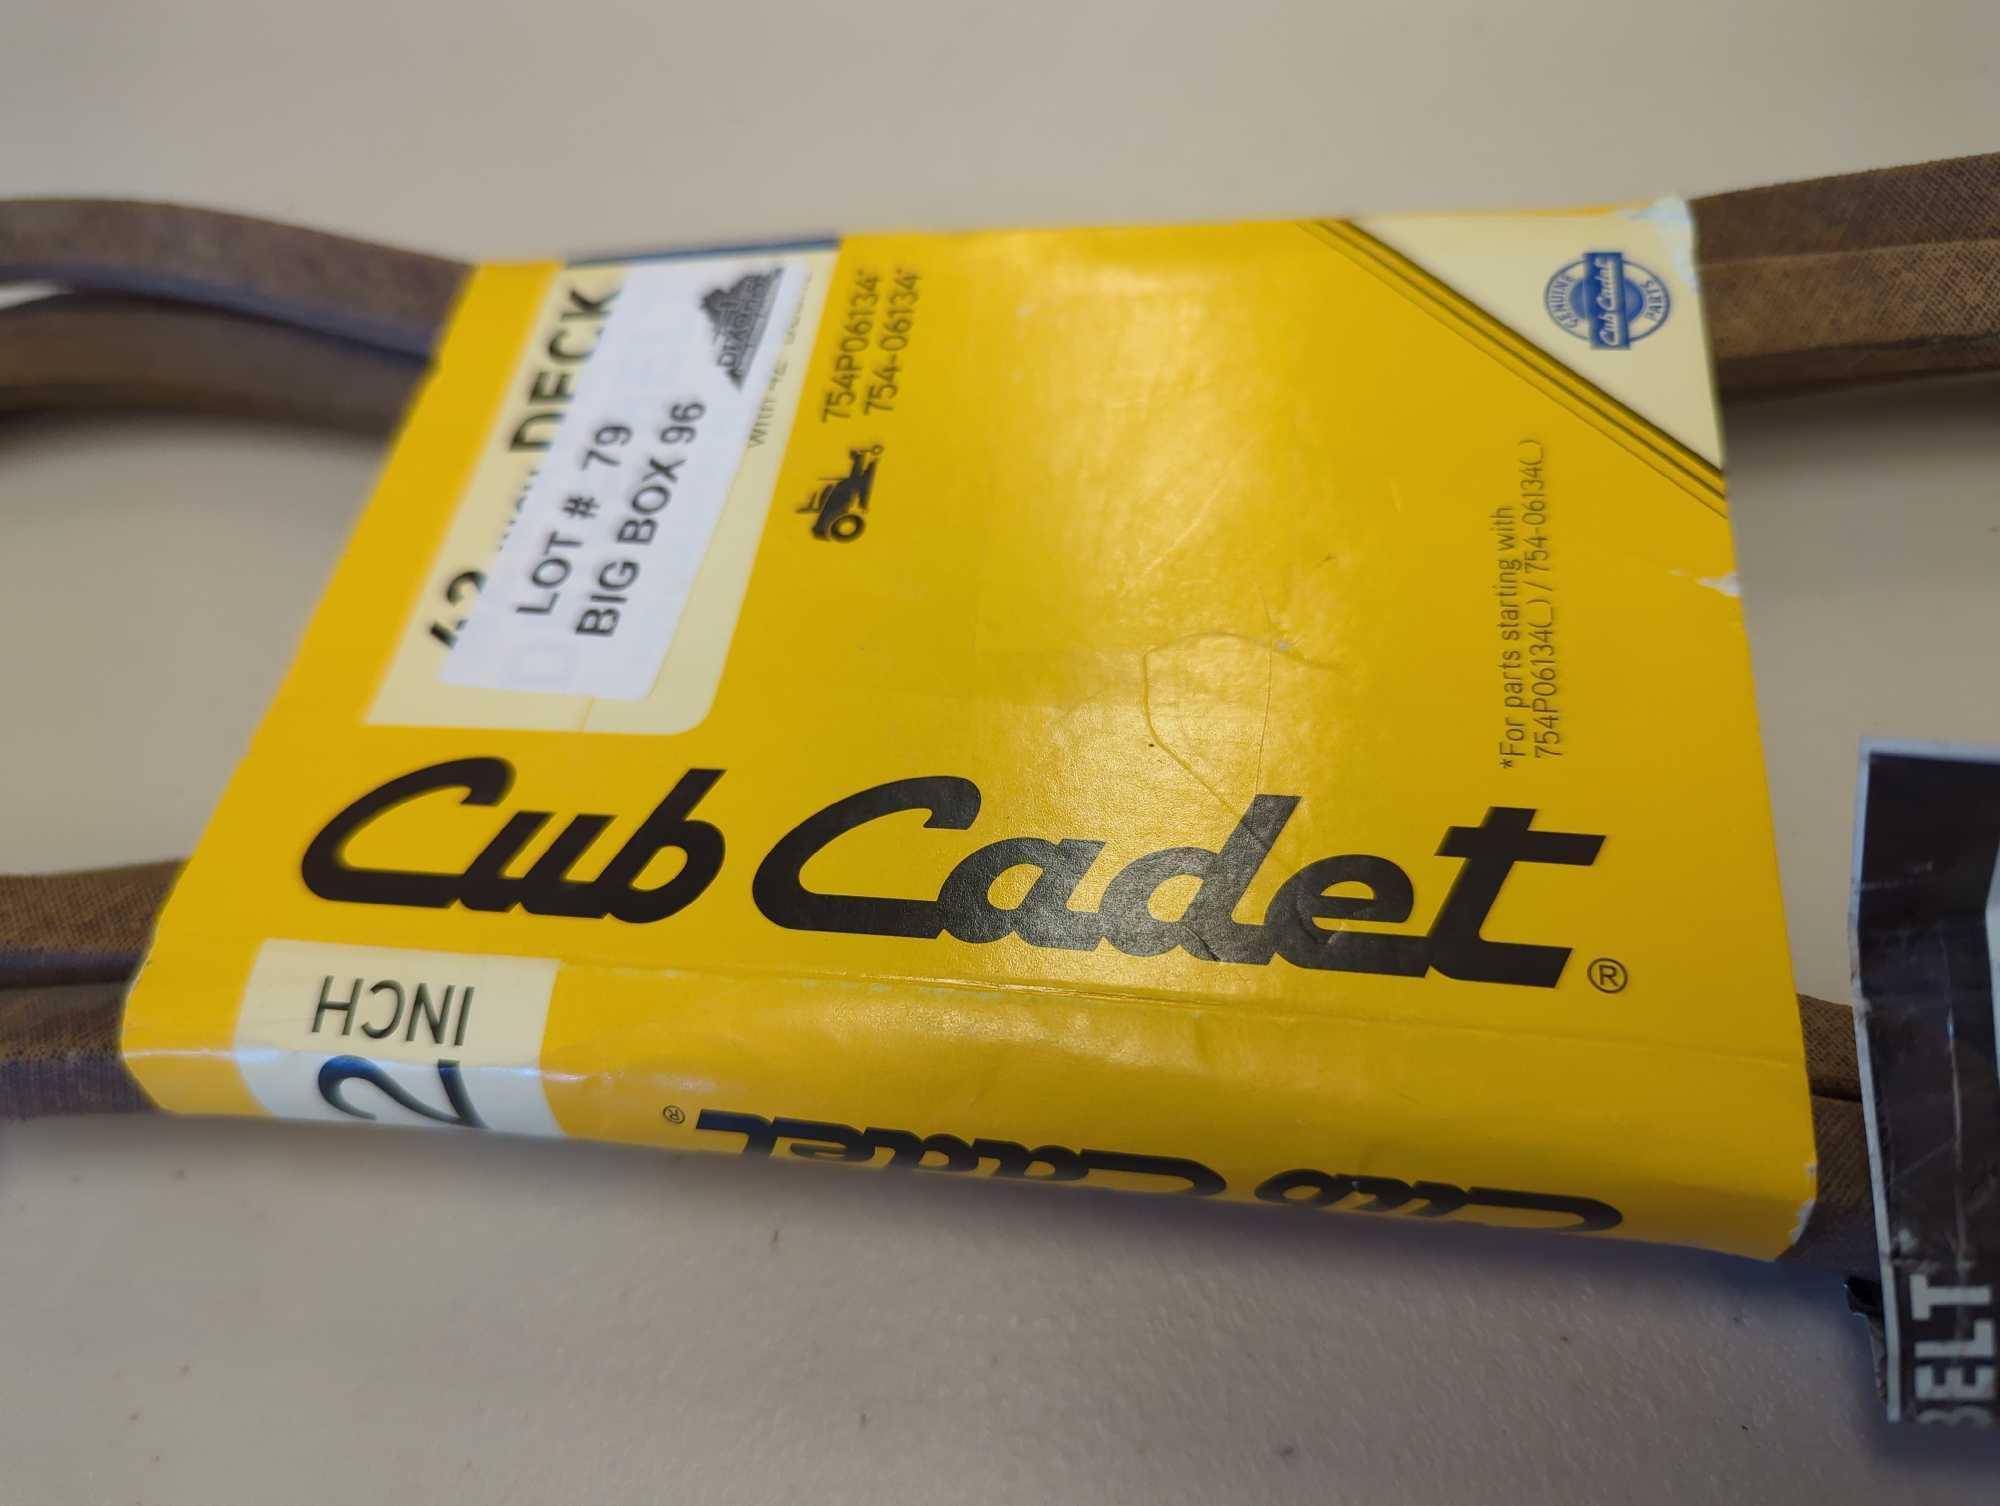 Cub Cadet Original Equipment Deck Drive Belt for Select 42 in. Zero Turn Lawn Mowers OE# 754P06134.